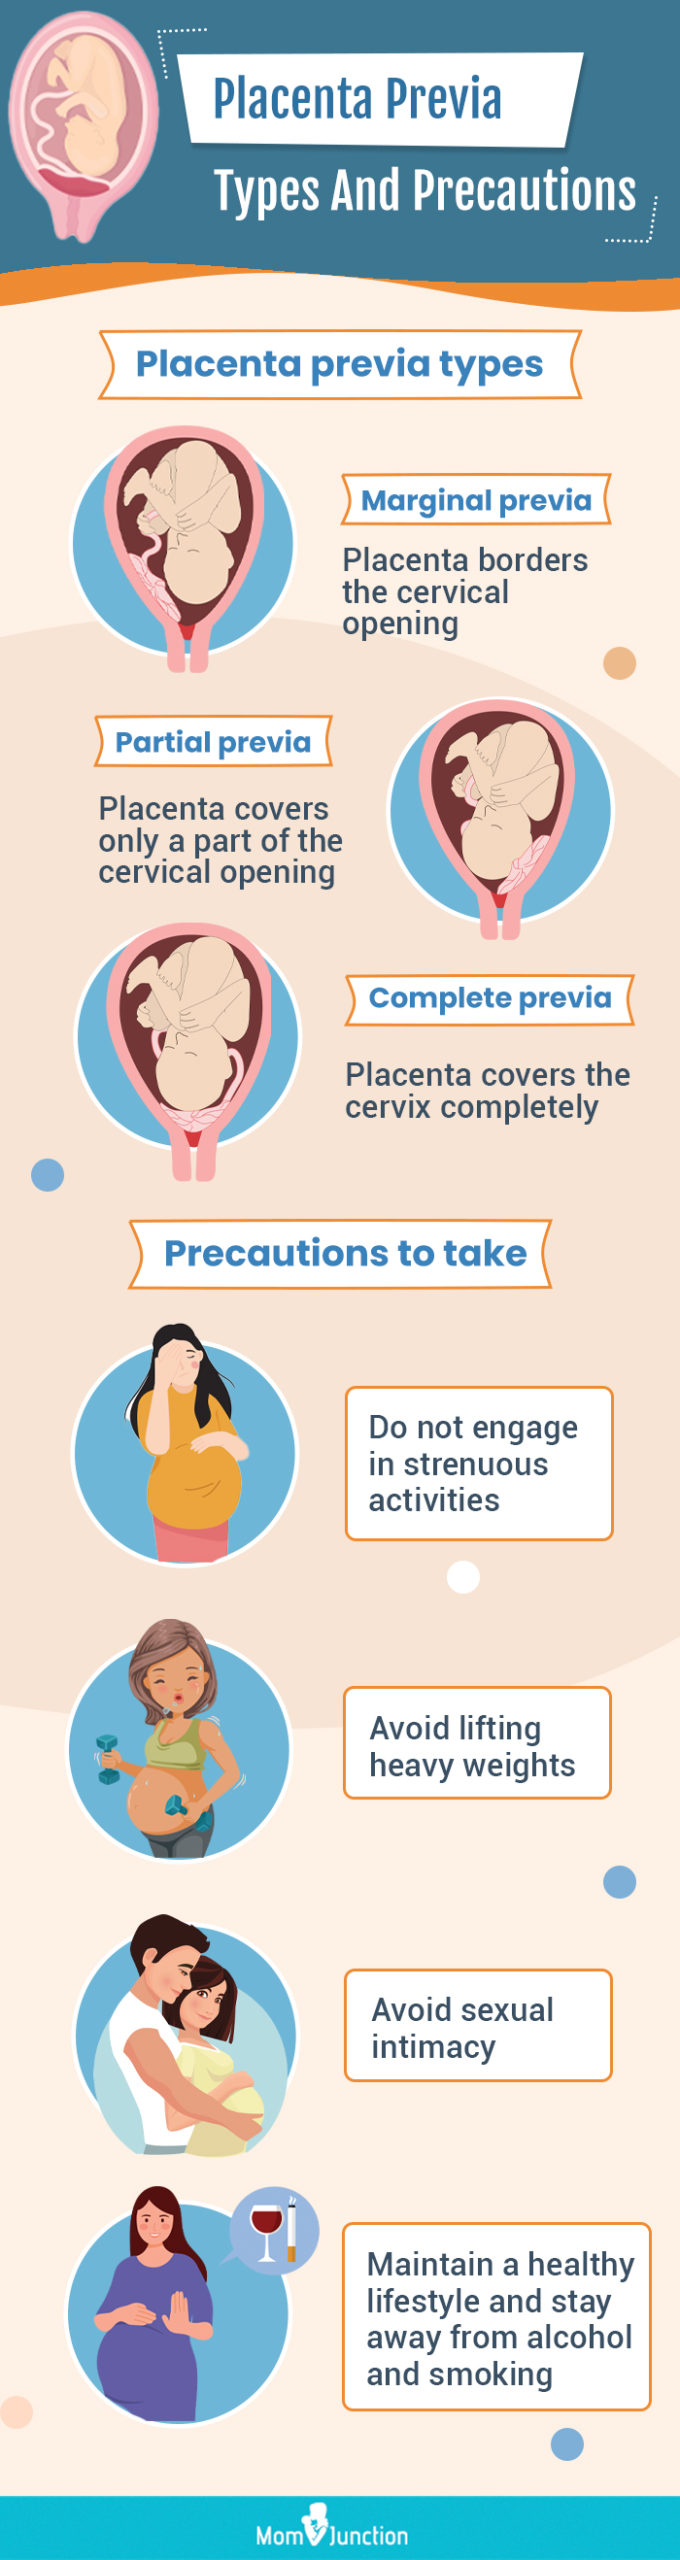 placenta previa types and precautions (infographic)